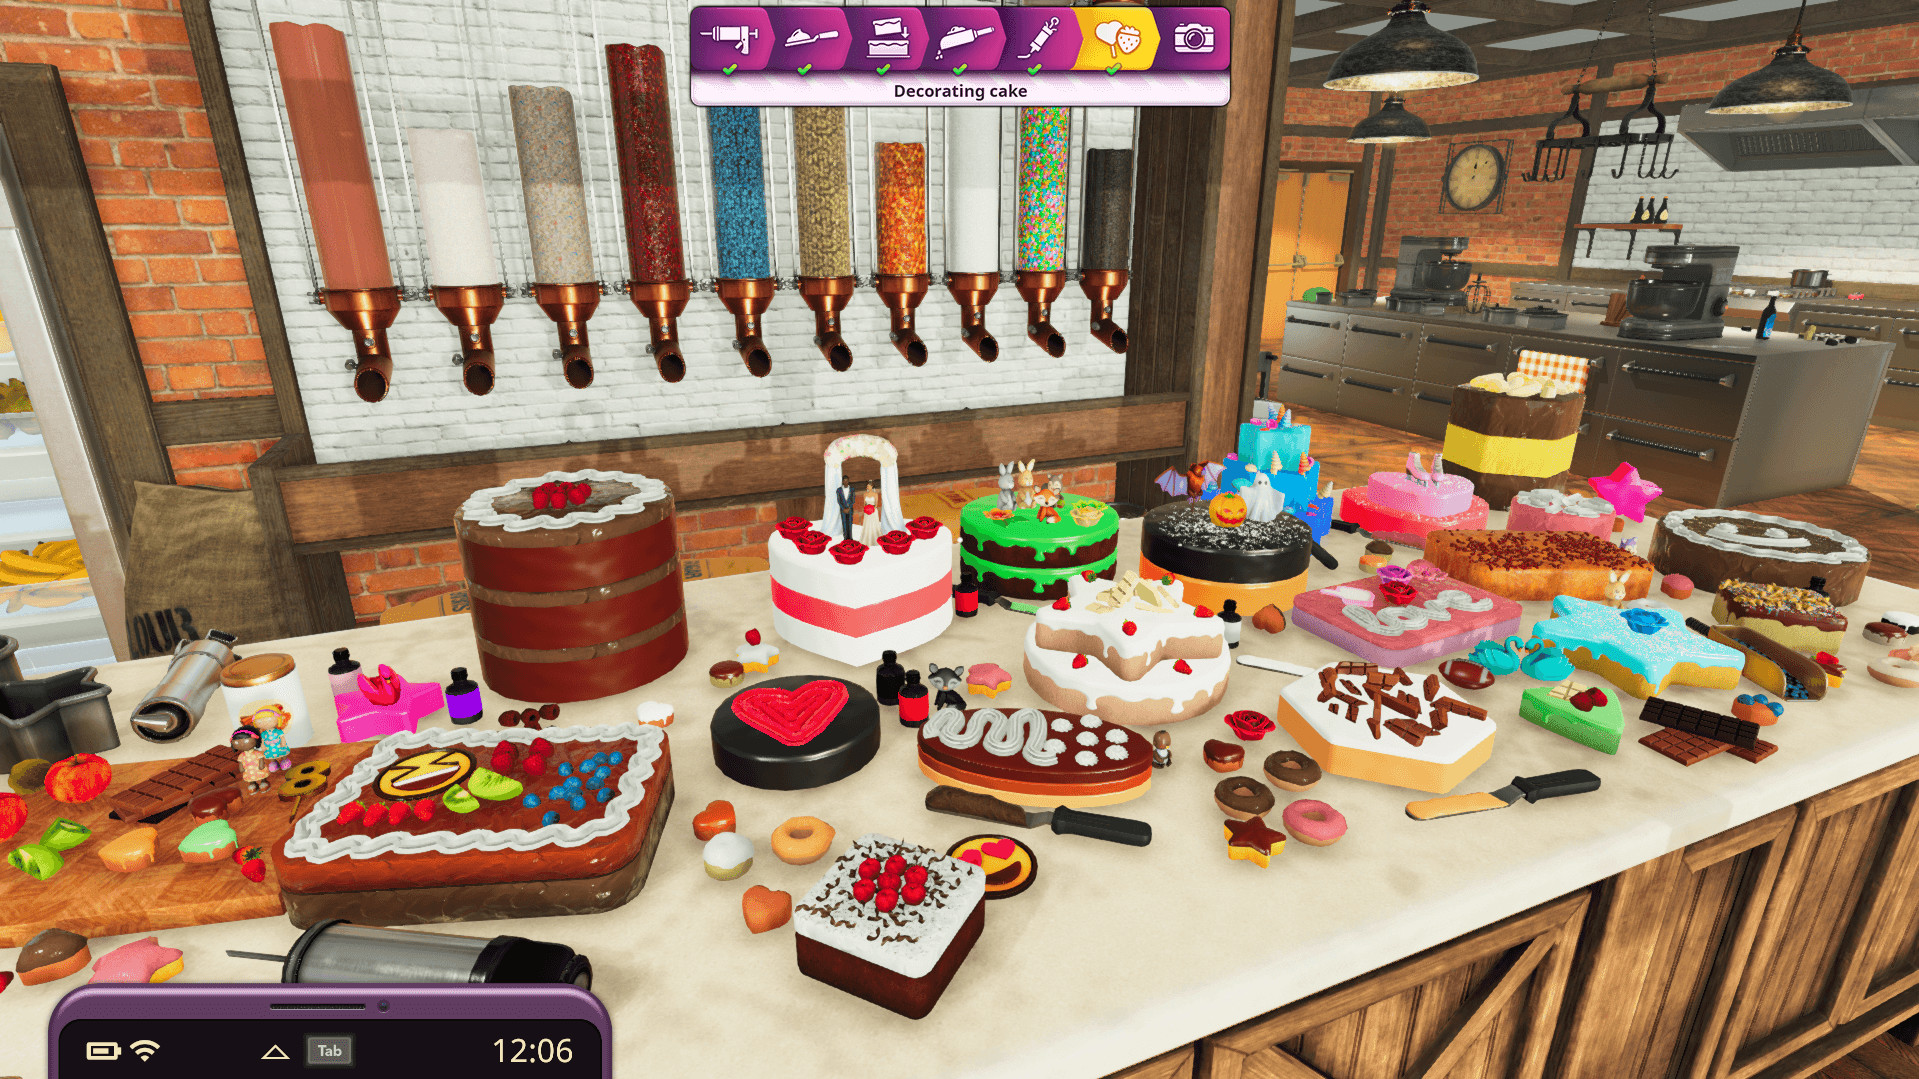 Make Cake - Baking Games on the App Store